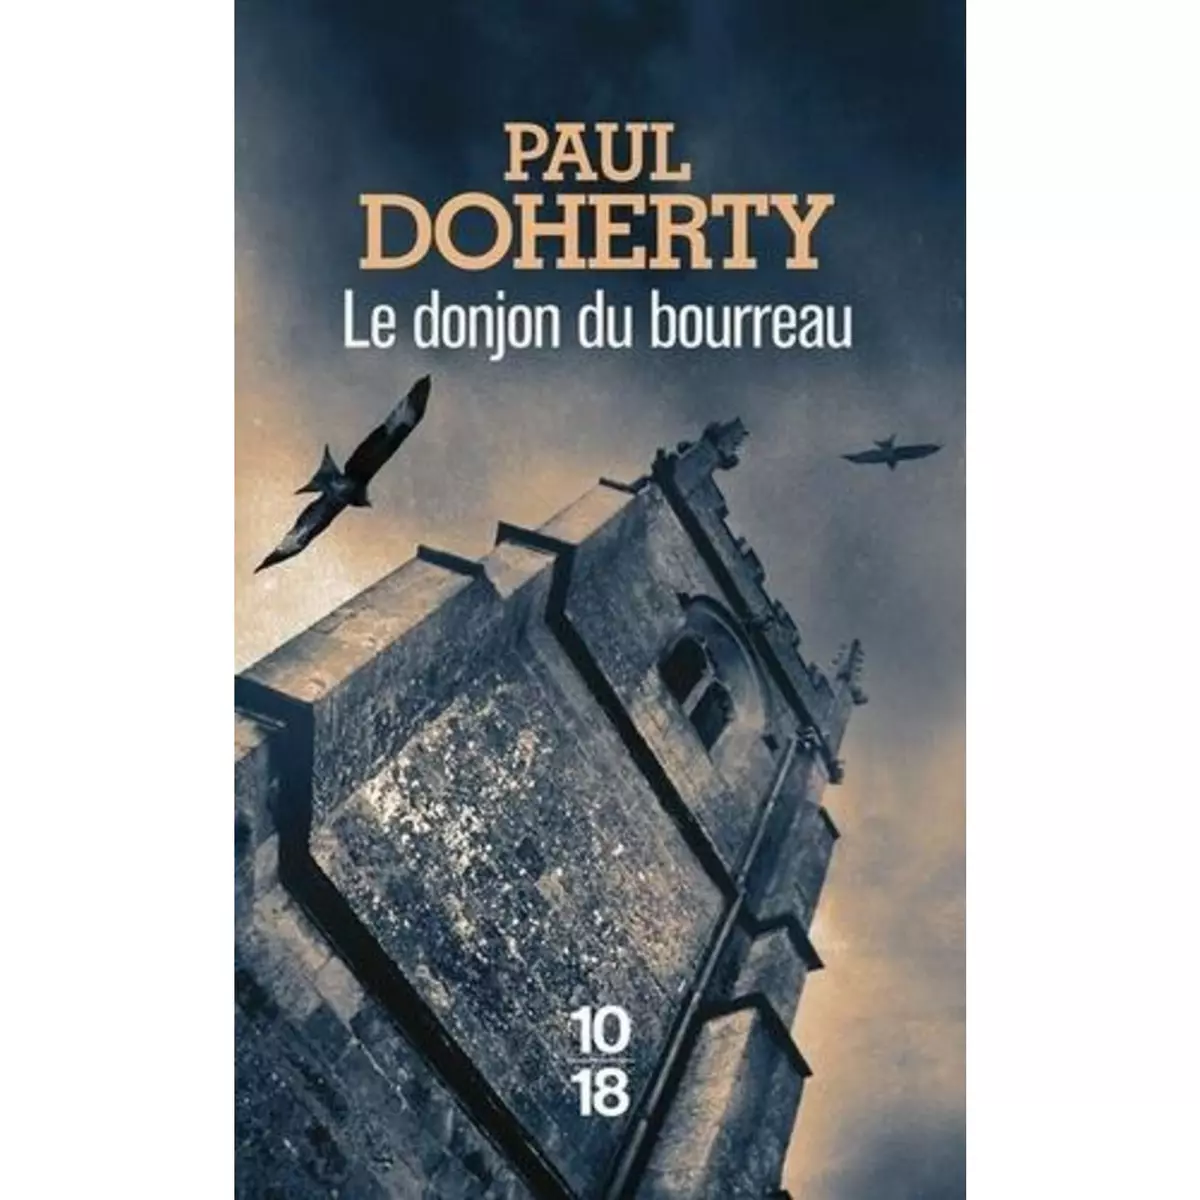  LE DONJON DU BOURREAU, Doherty Paul